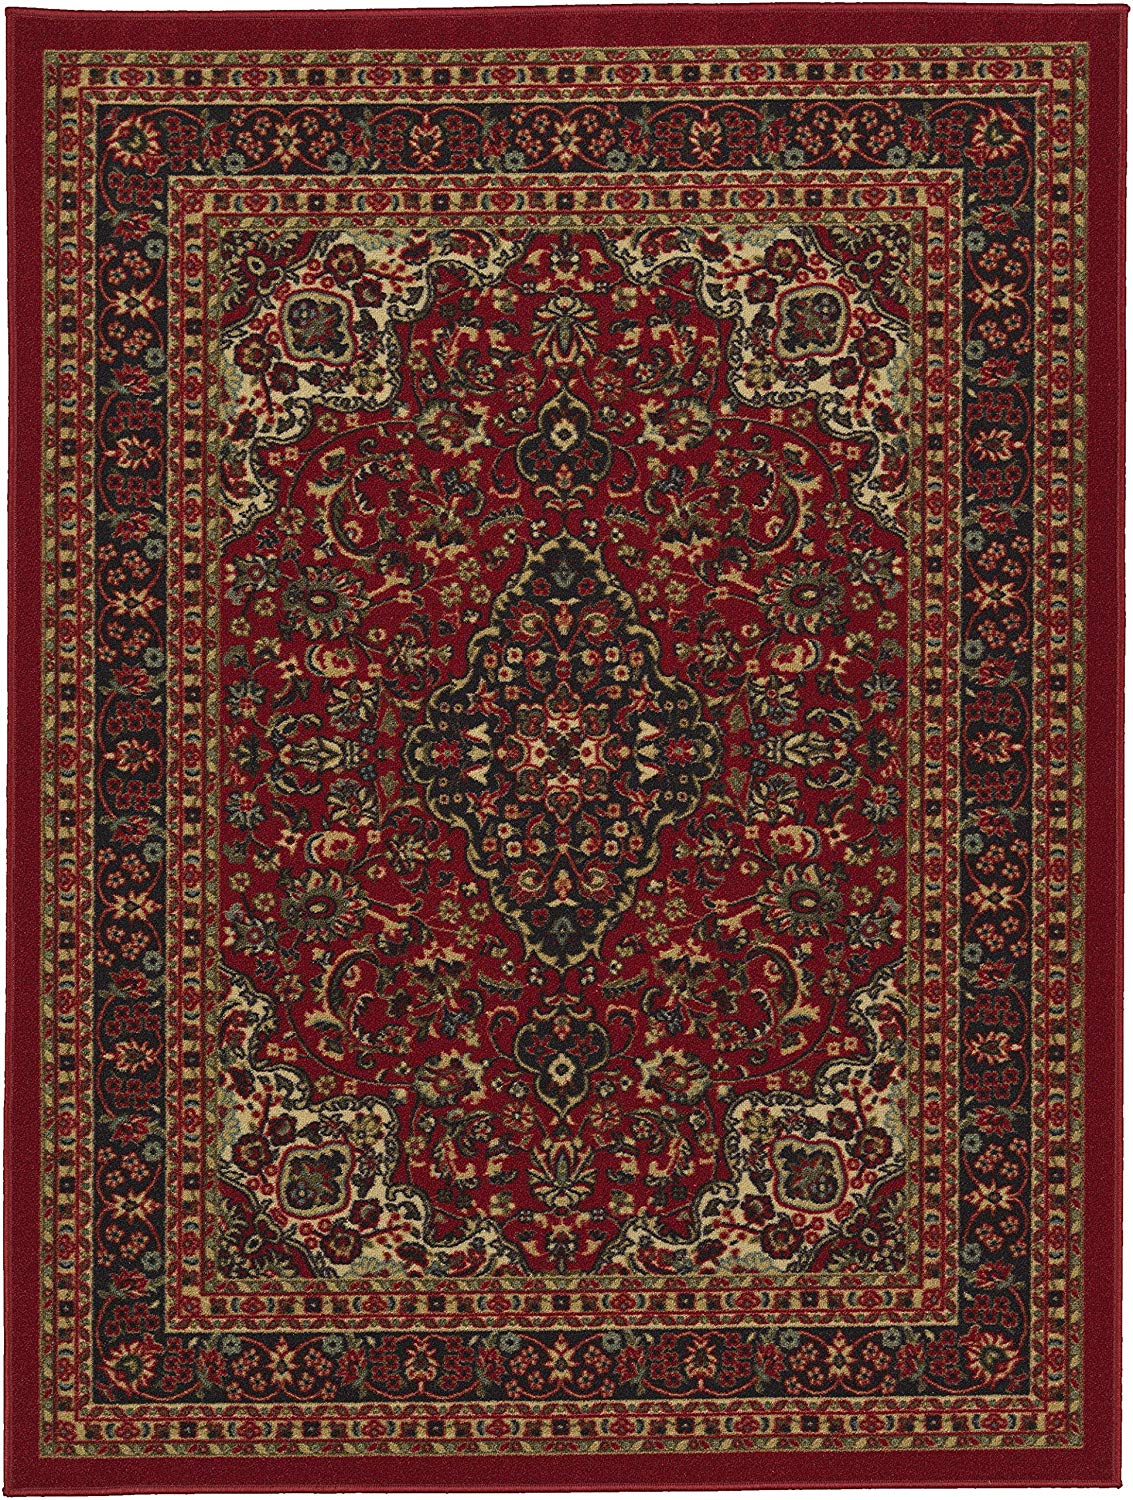 Persian Oriental Design Red Non-Skid Area Rugs